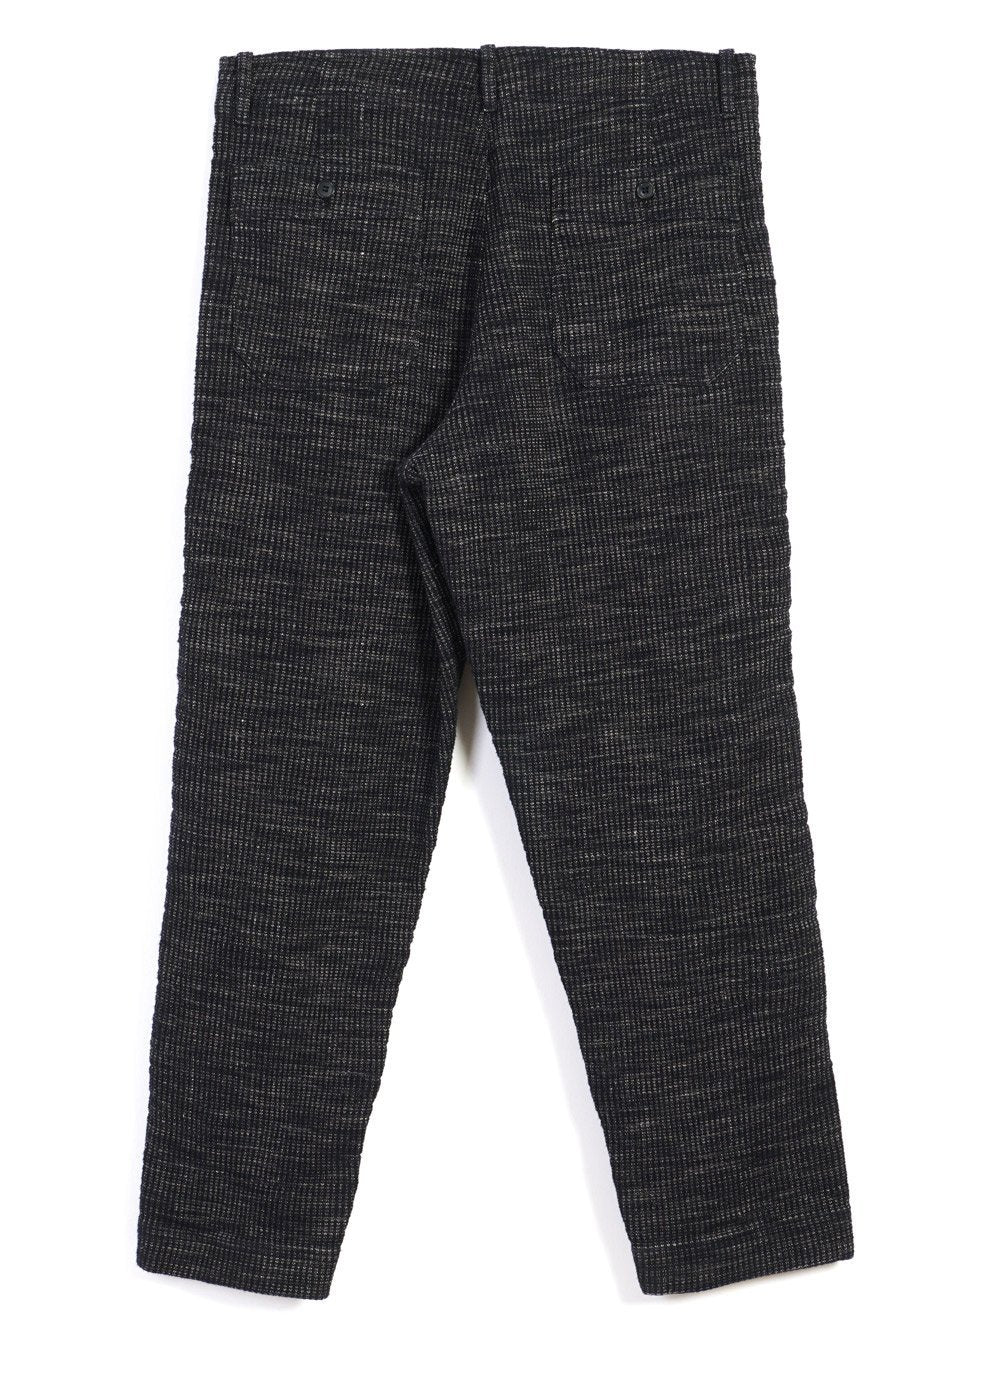 HANSEN GARMENTS - TRYGVE | Wide Cut Cropped Trousers | Black Hemp - HANSEN Garments